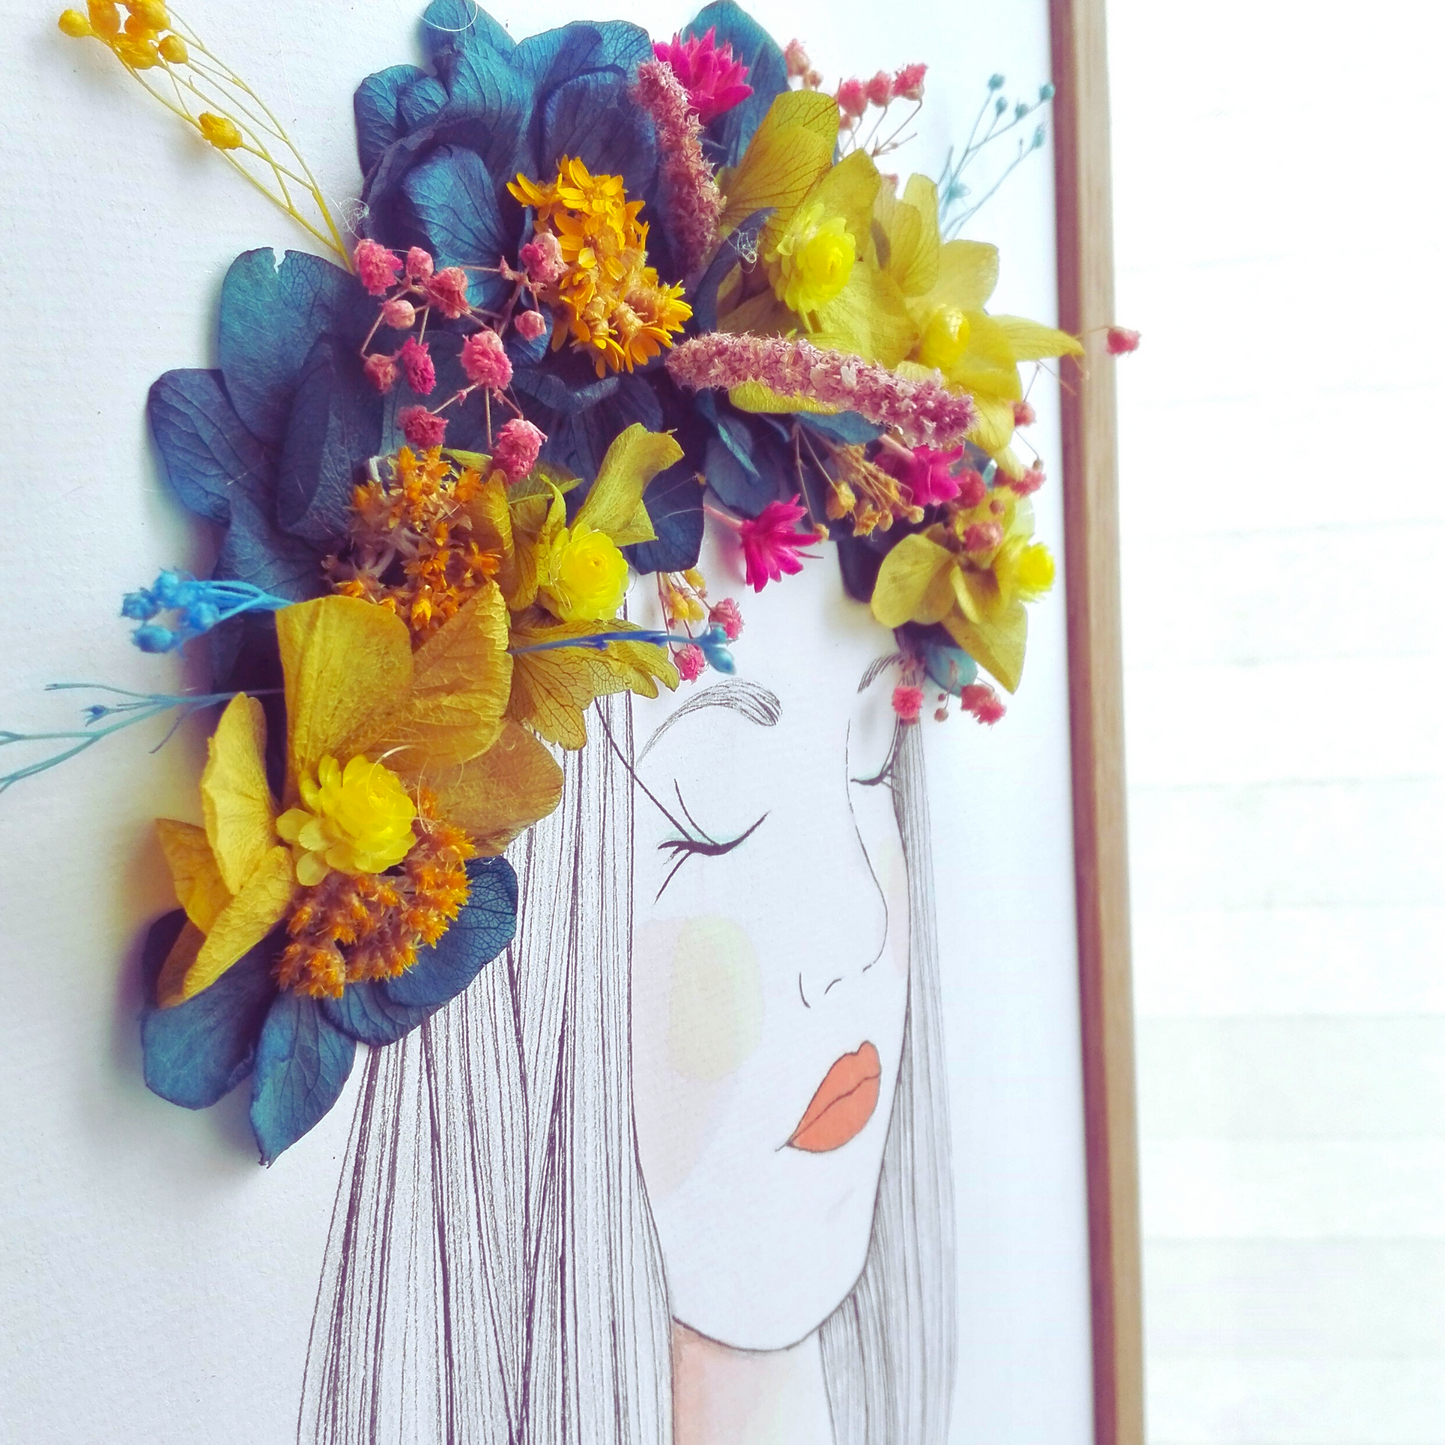 Taller de ilustración con flores